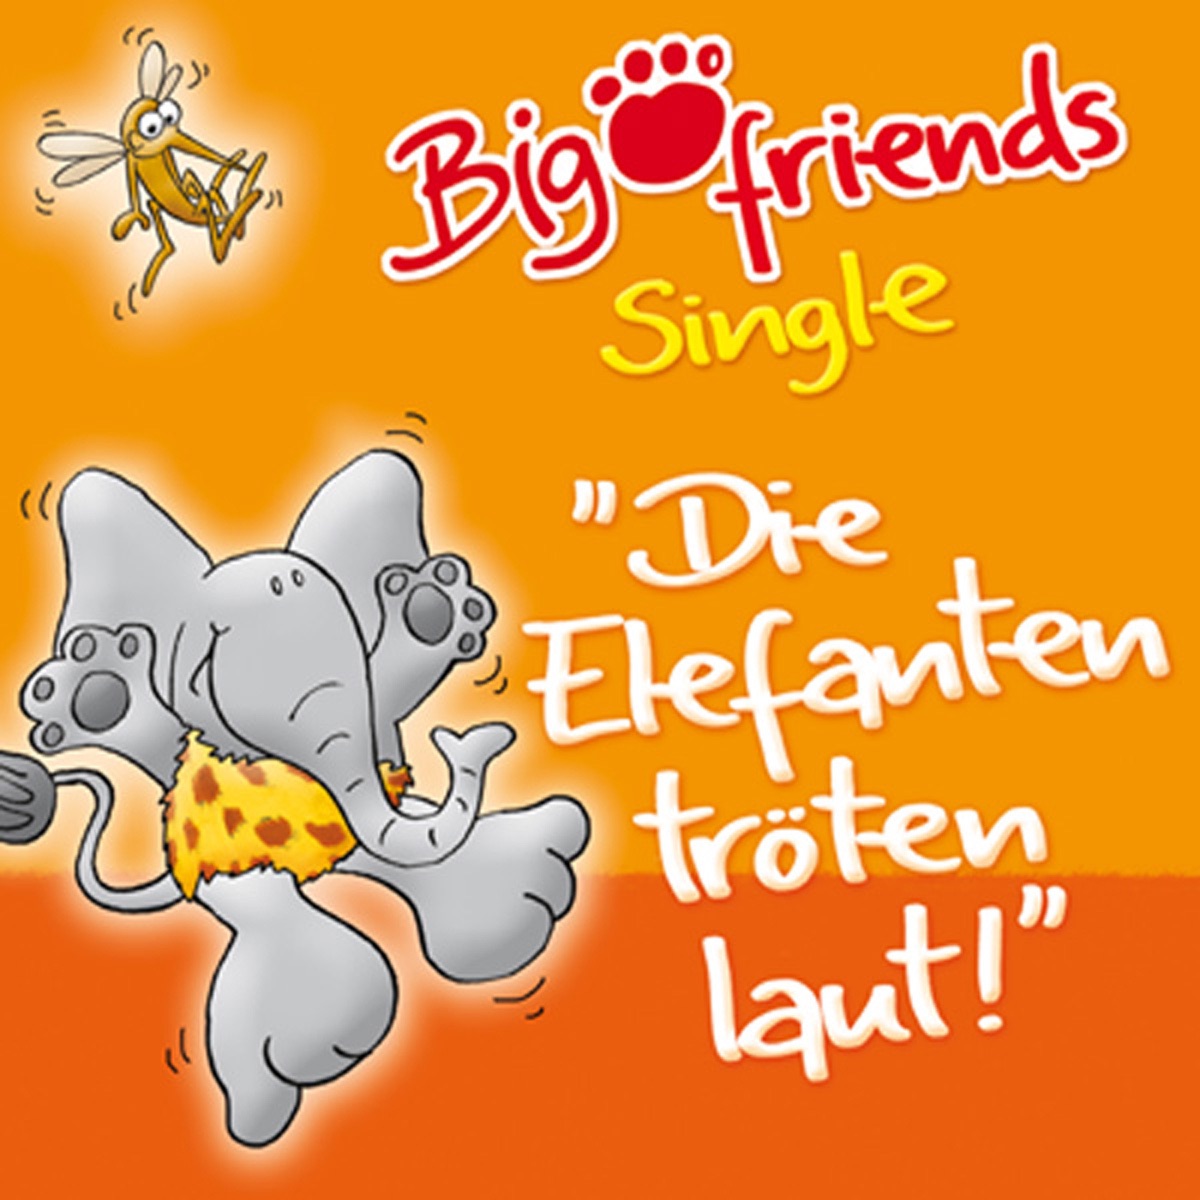 Die Elefanten tröten laut! - Single - Album by Big Foot Friends - Apple  Music